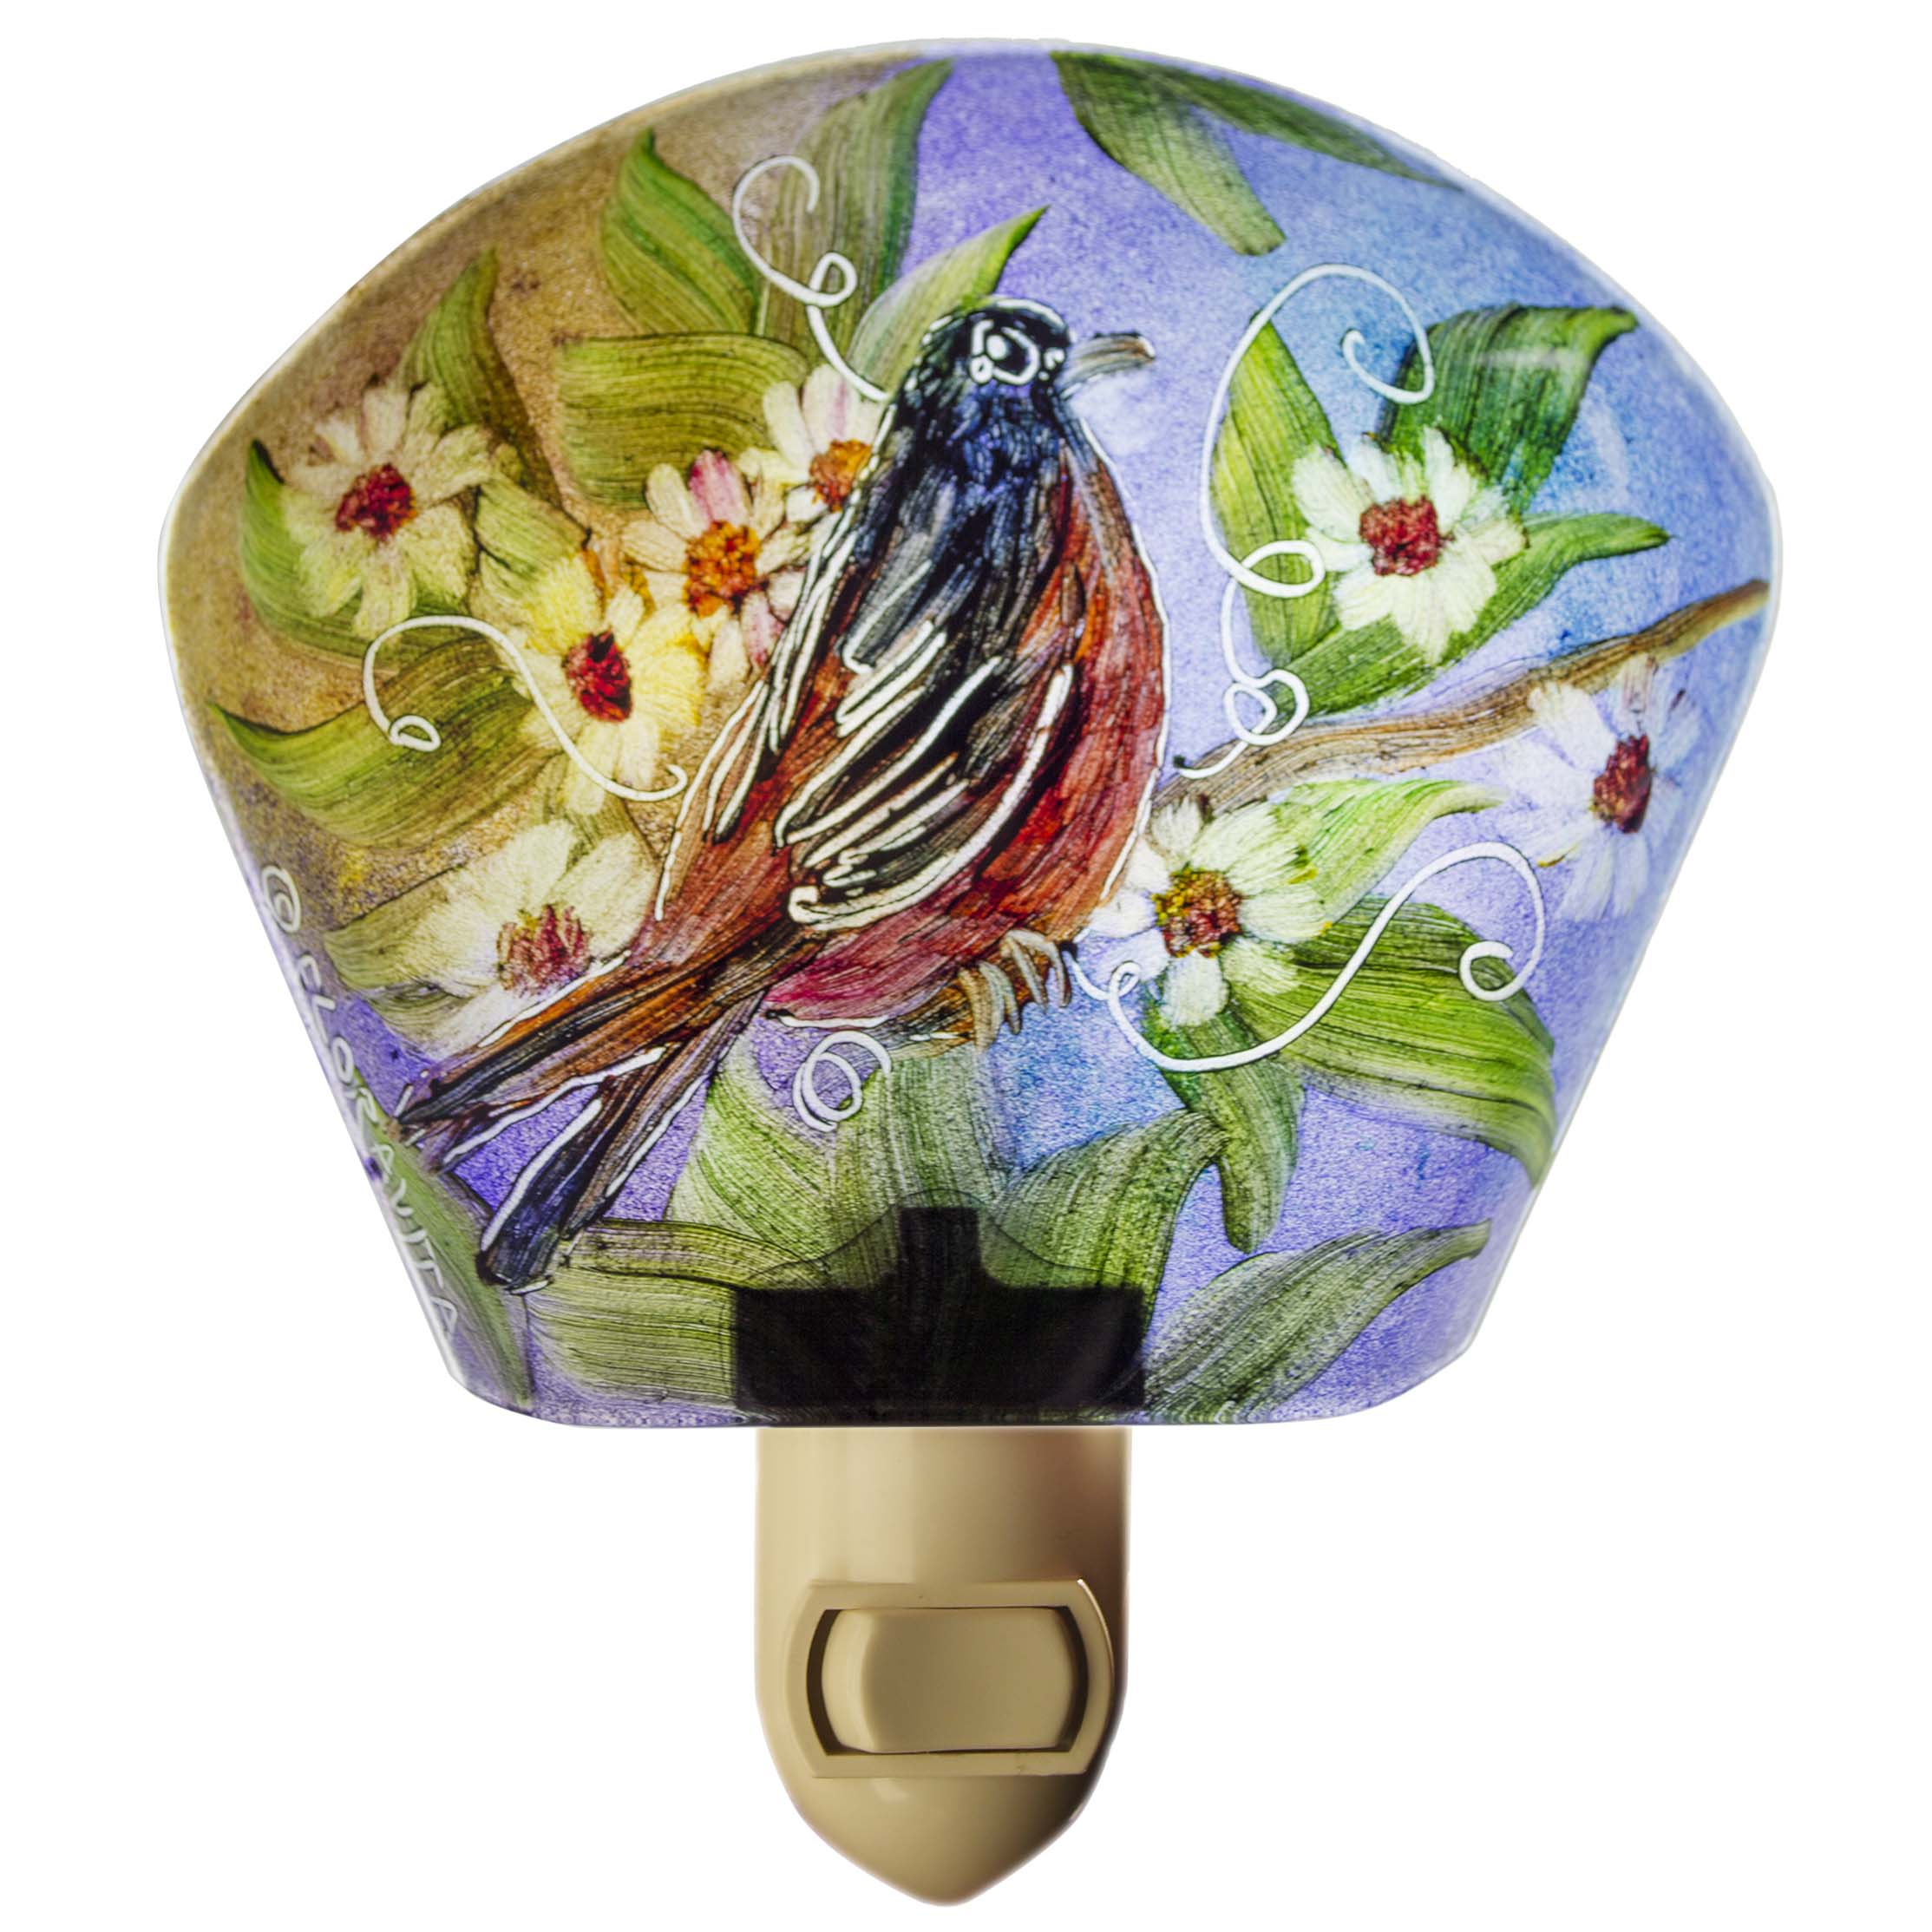 Hand painted glass bird night light by artist Jenny Floravita